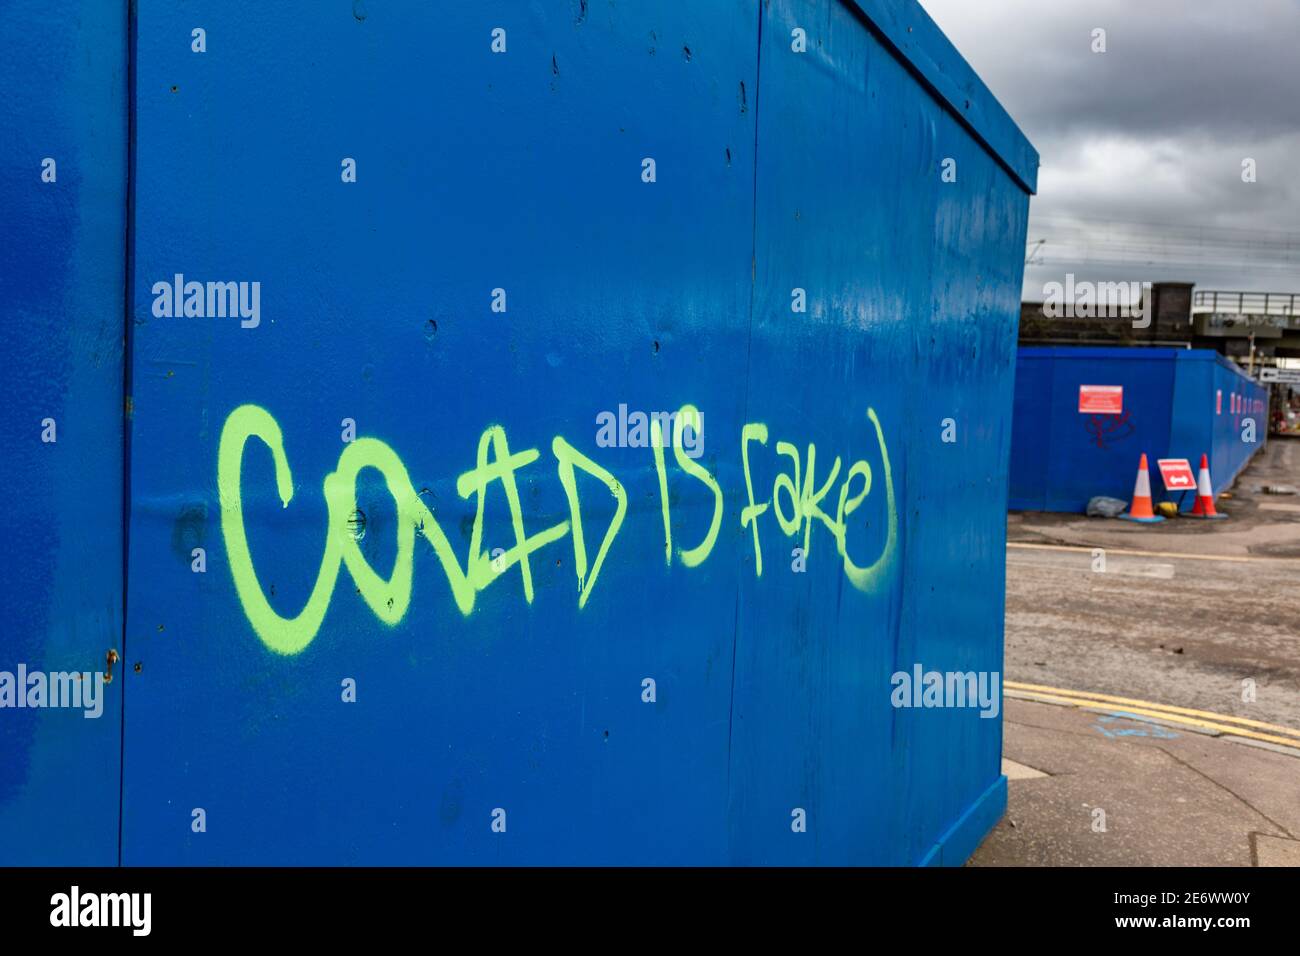 Covid is fake grafitti on a hoarding, 2021 Stock Photo